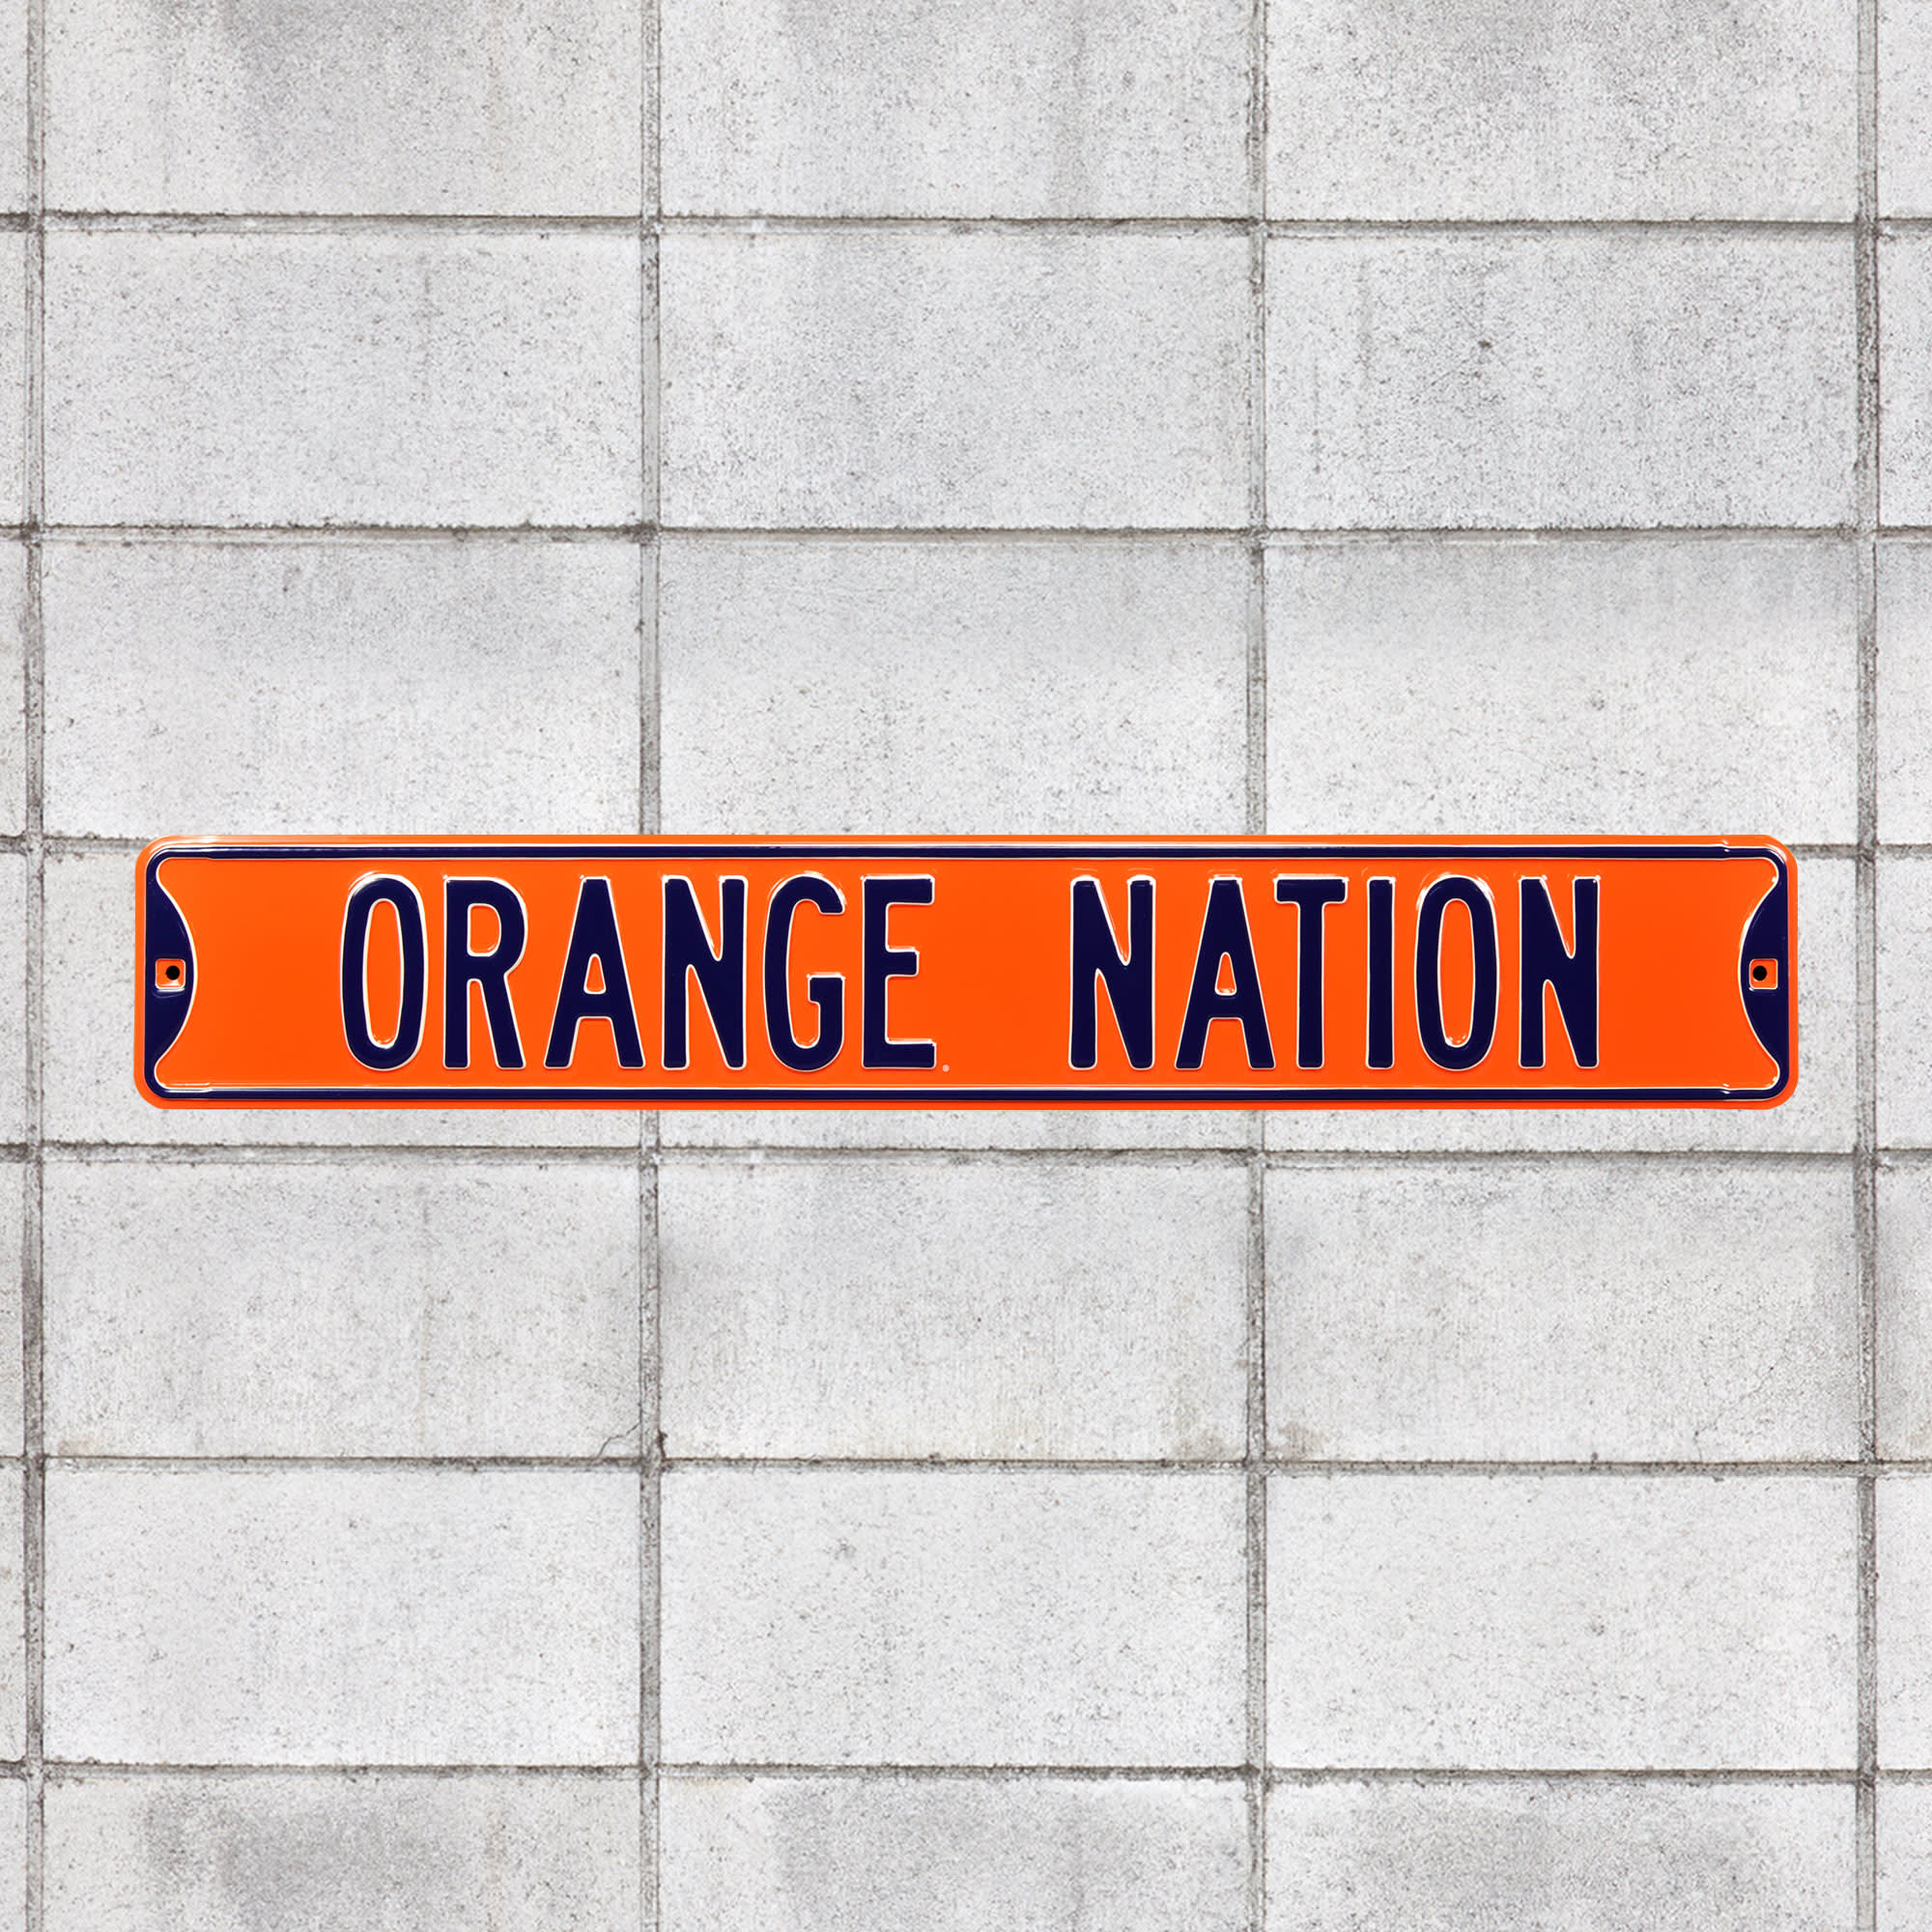 Syracuse Orange for Syracuse Orangemen: Orange Nation - Officially Licensed Metal Street Sign 36.0"W x 6.0"H by Fathead | 100% S